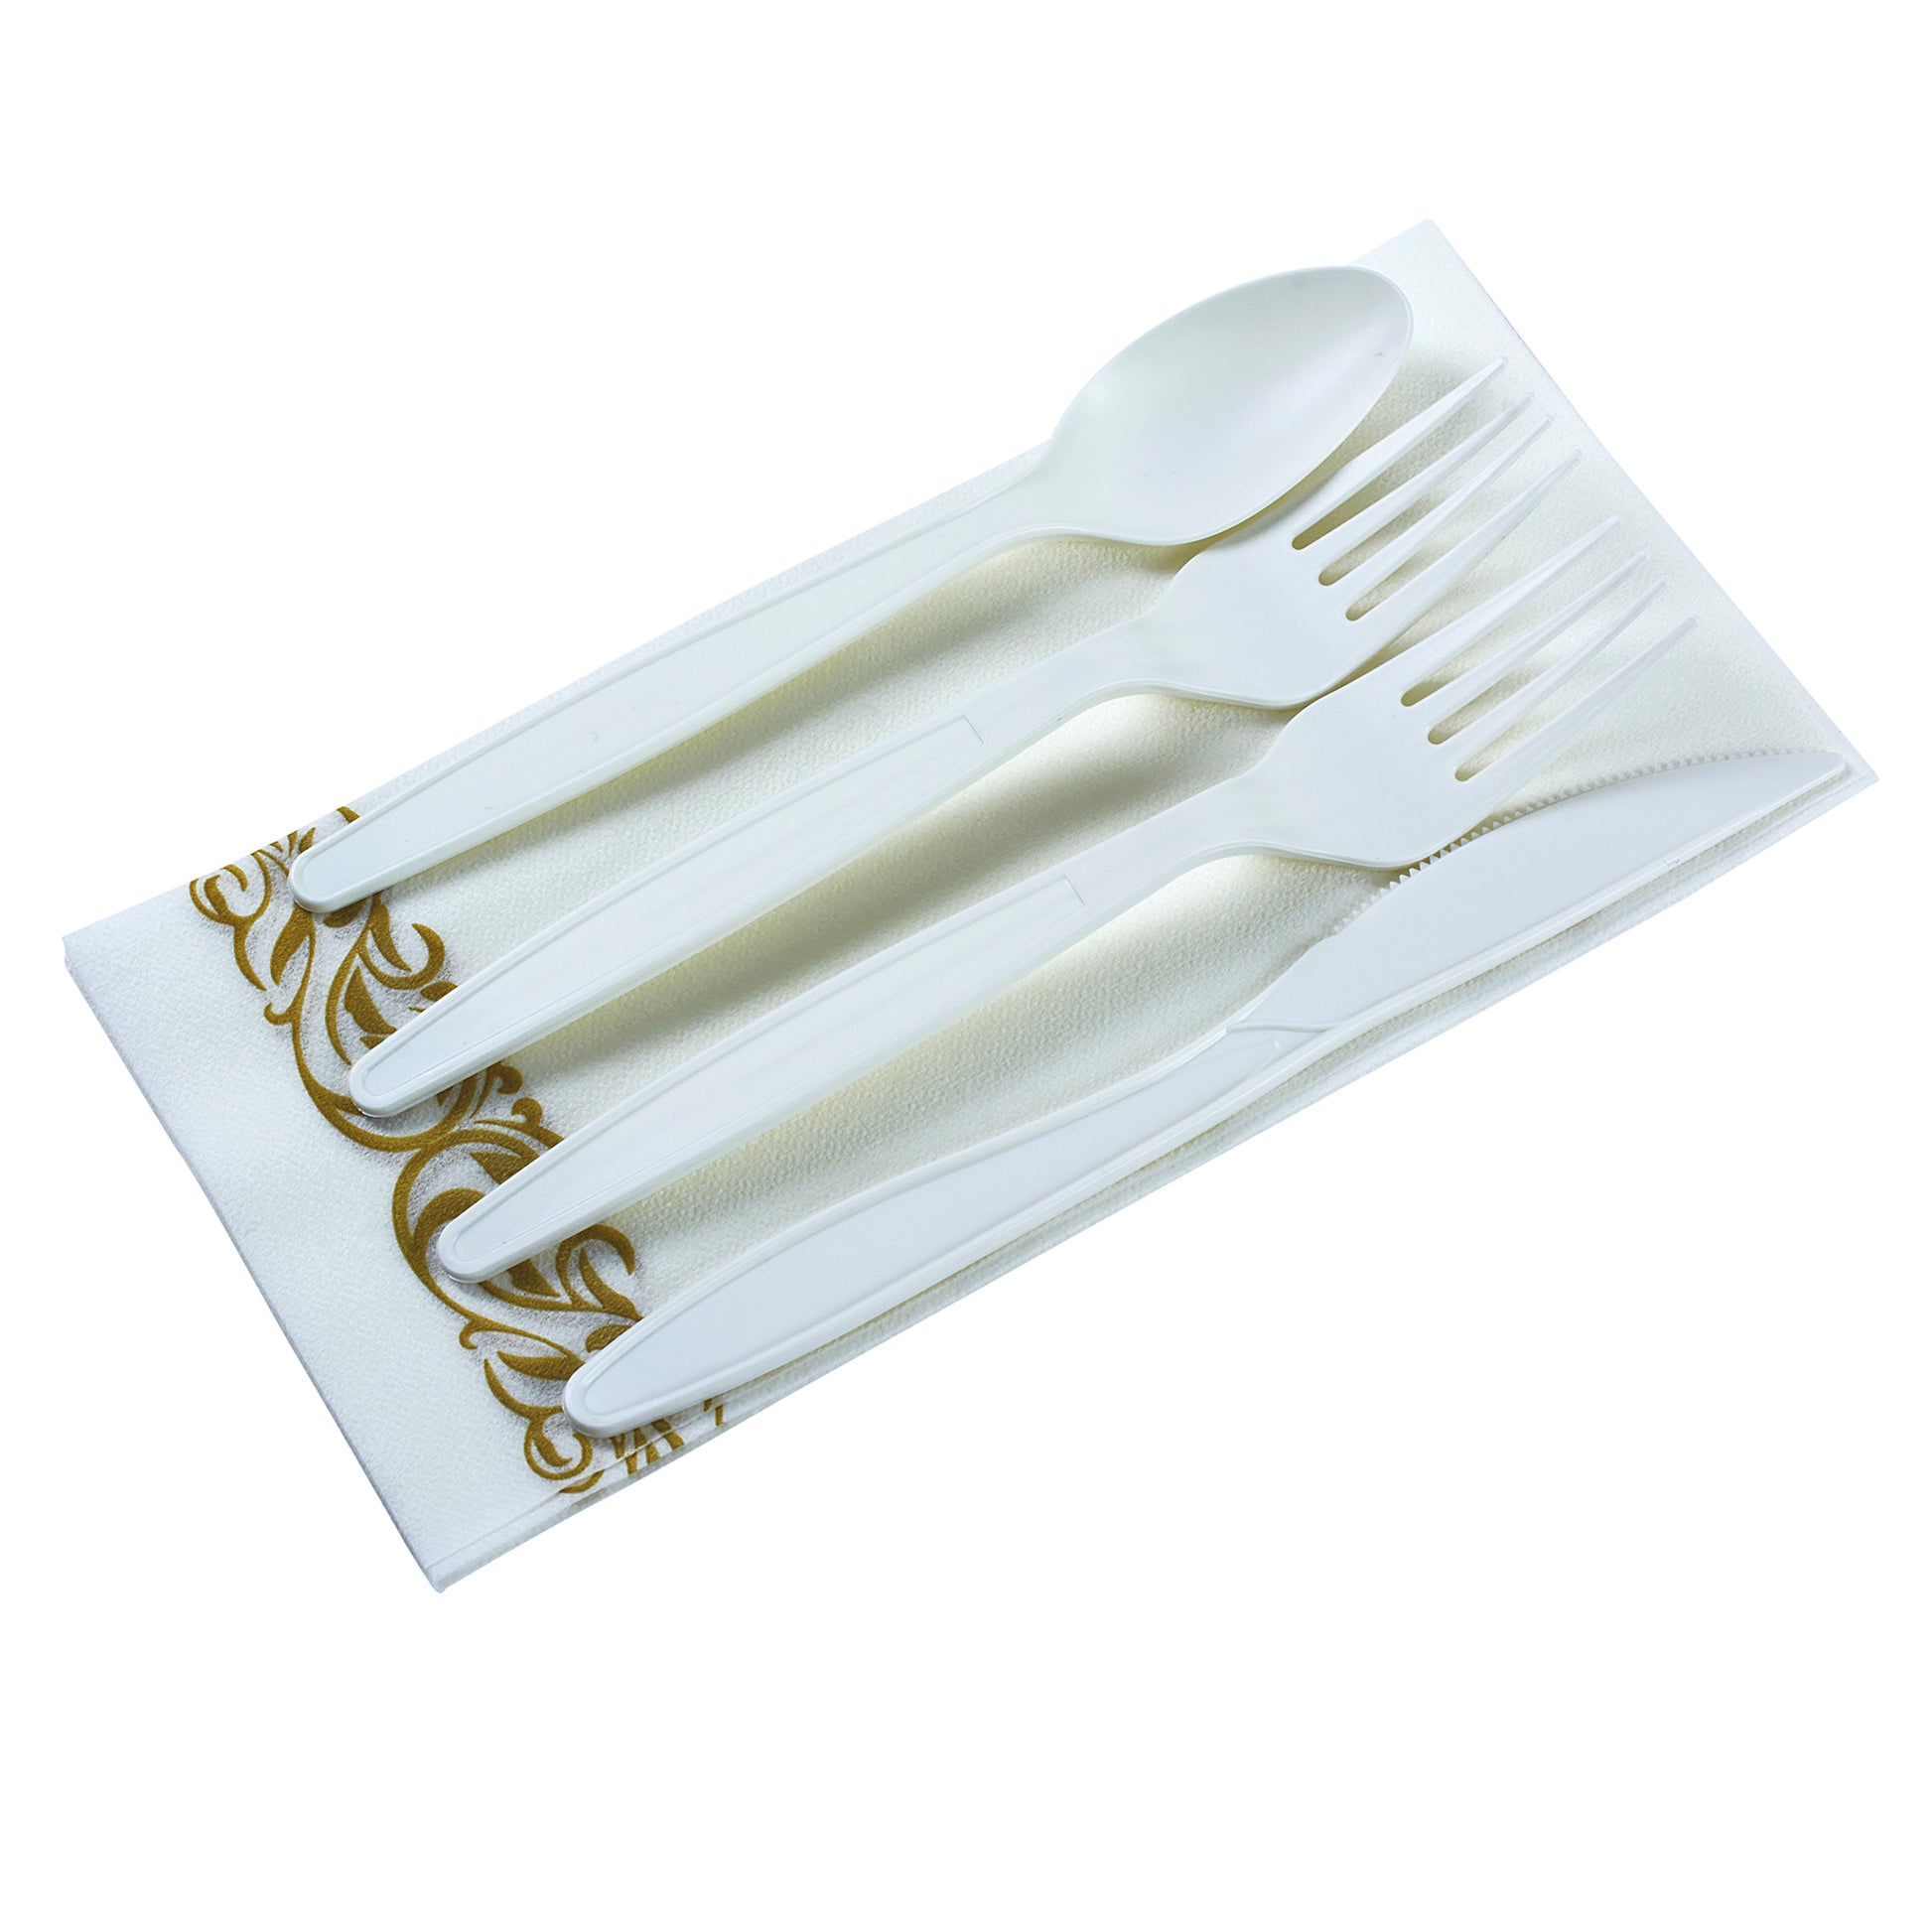 Compostable Plastic Knife Disposable White Plastic Knife